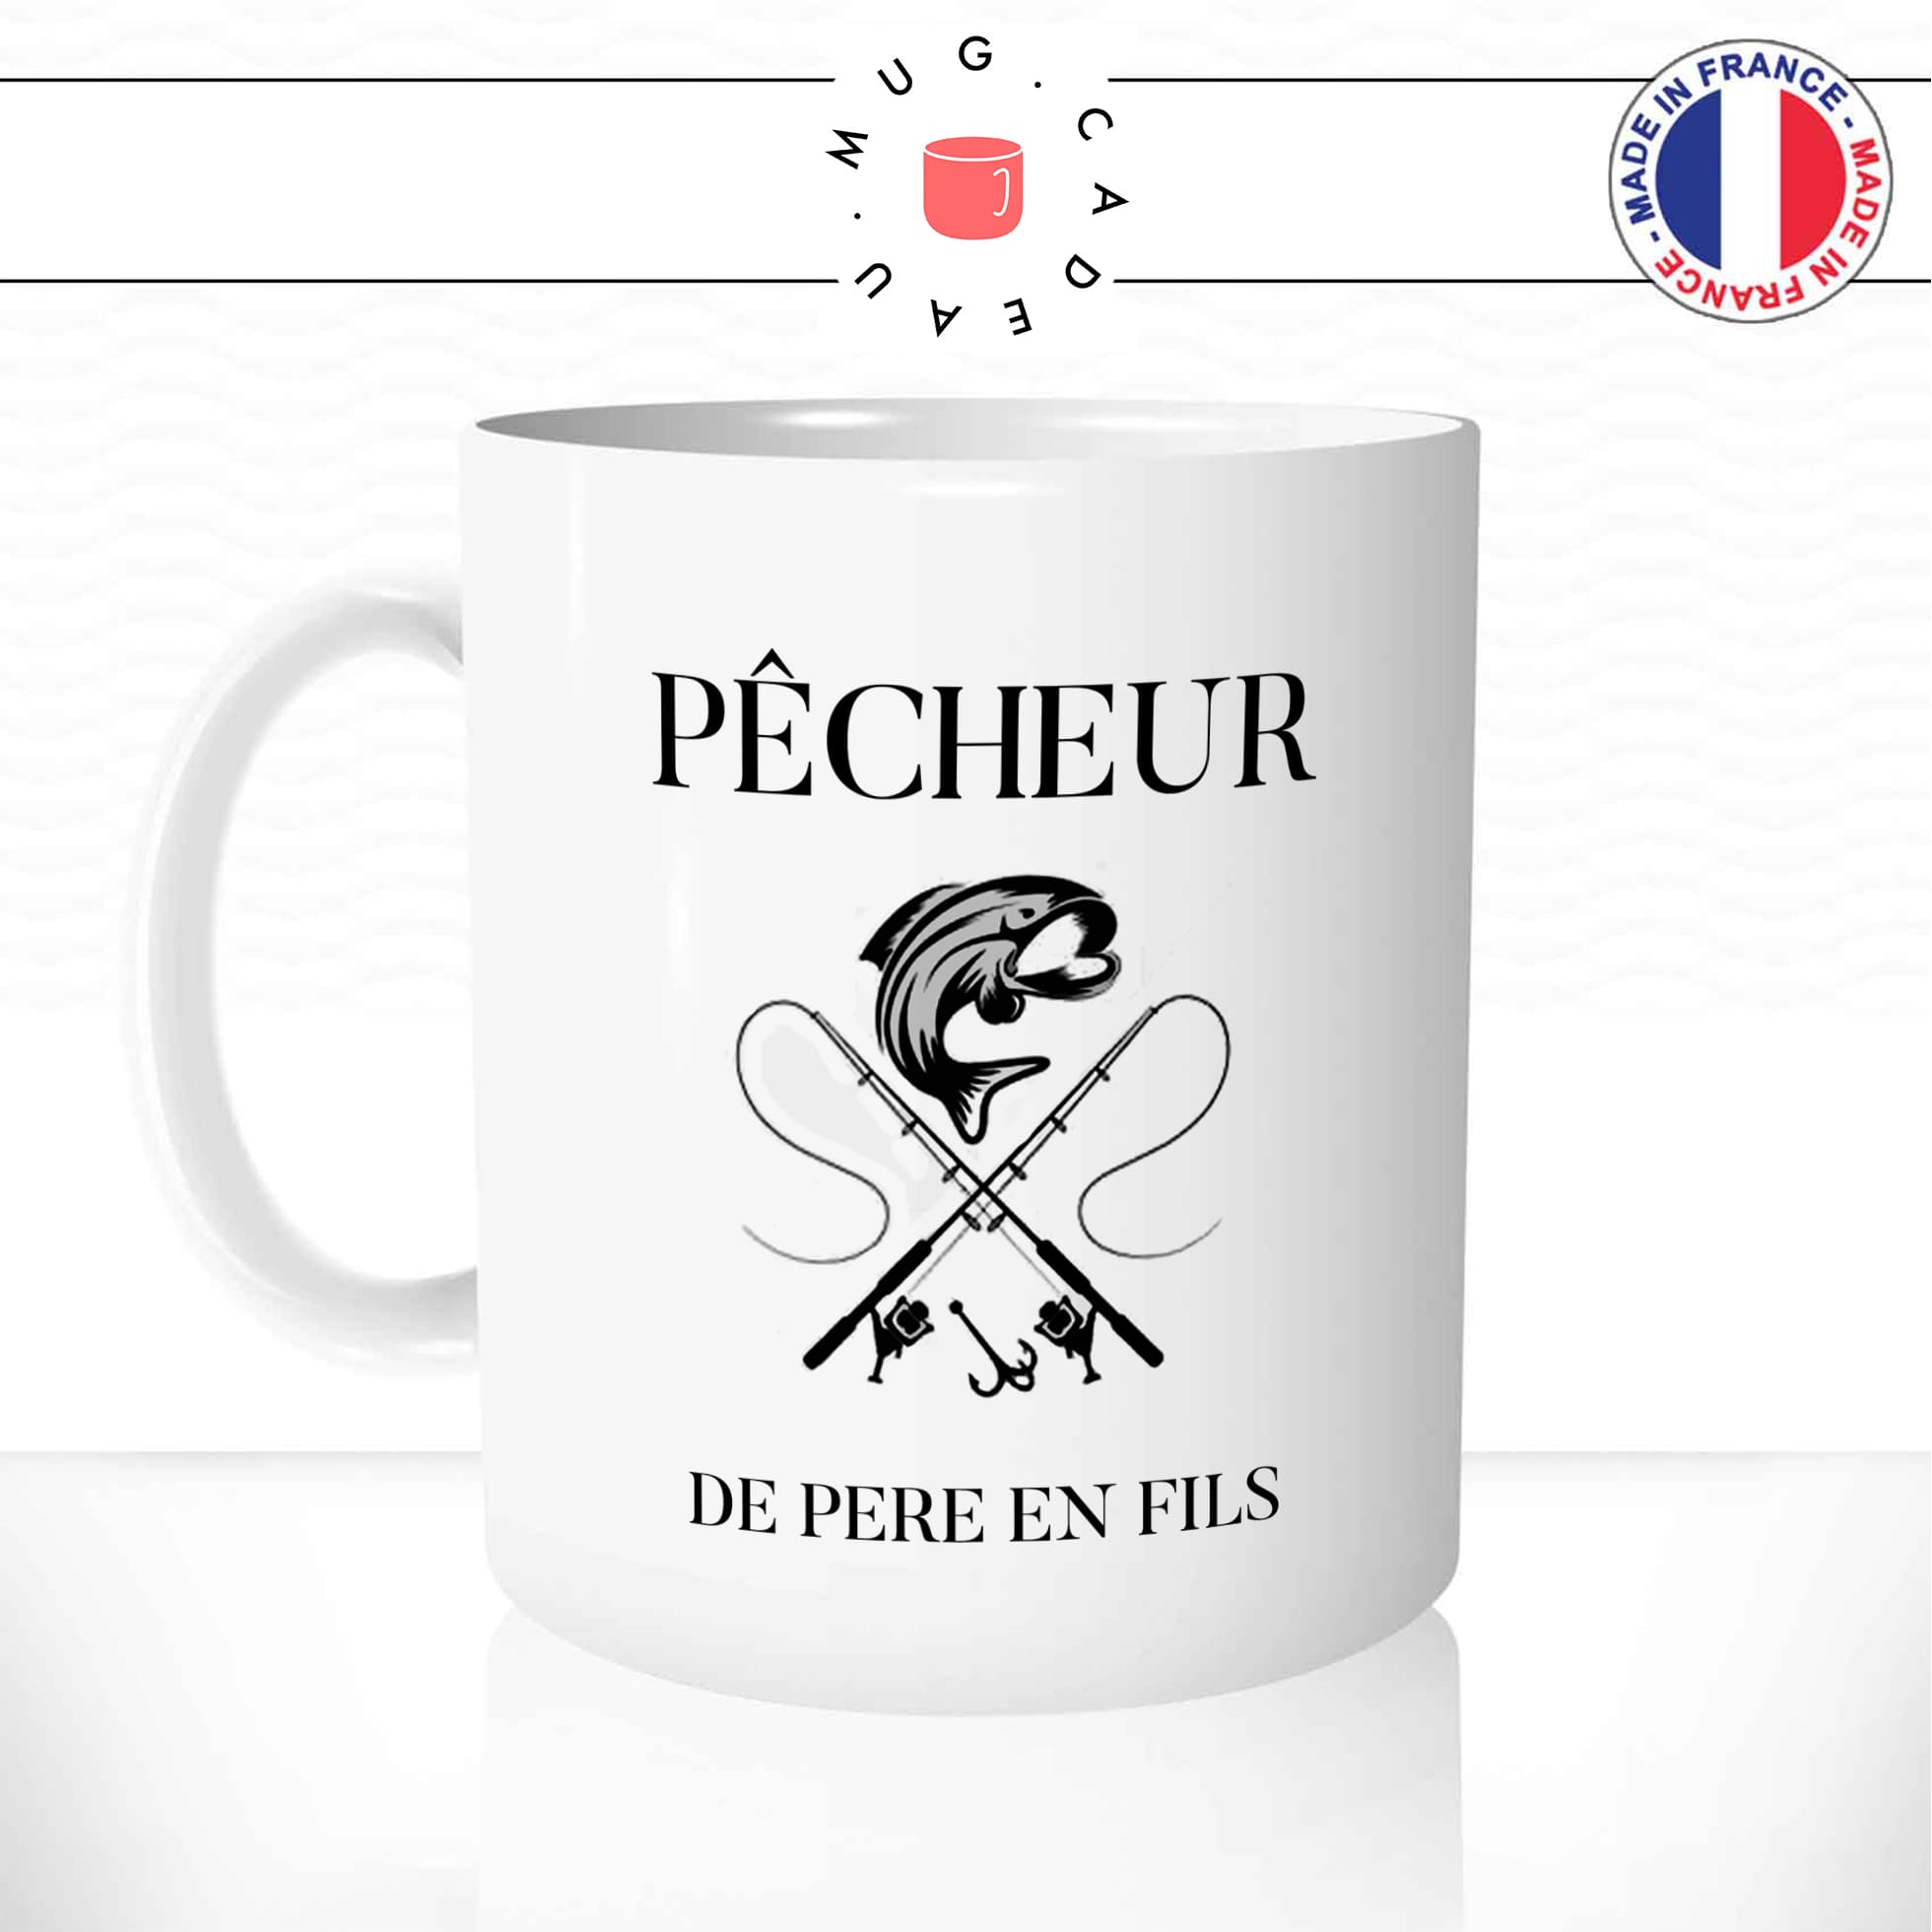 https://media.cdnws.com/_i/189179/4798/1180/1/mug-tasse-pecheur-de-peere-en-fils-pecher-poisson-homme-papa-fete-des-peres-offrir-idee-cadeau-original-fun-cafe-the-tasse-personnalisee.jpeg